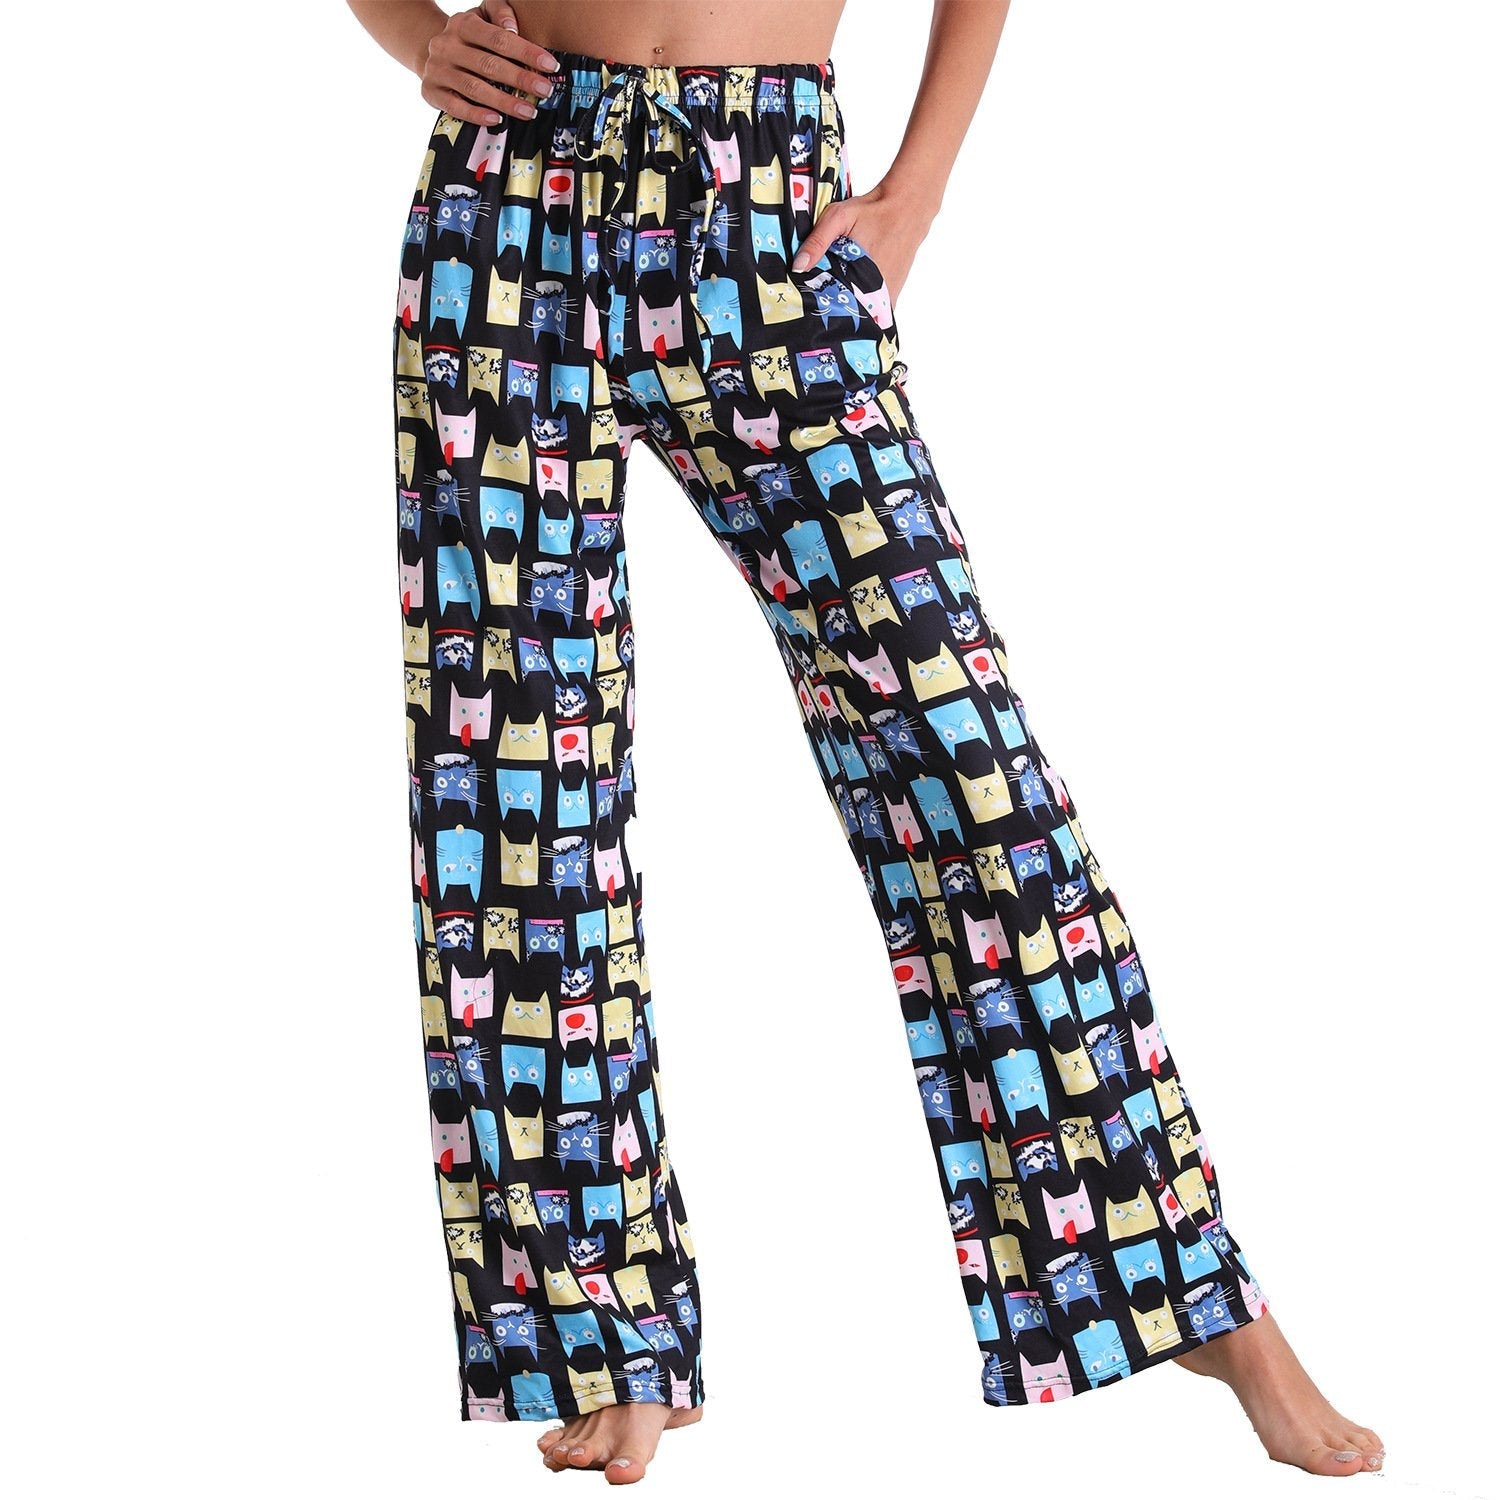 Leisure Women Comfortable Pants with Pocket-Pajamas-3016-S-Free Shipping Leatheretro